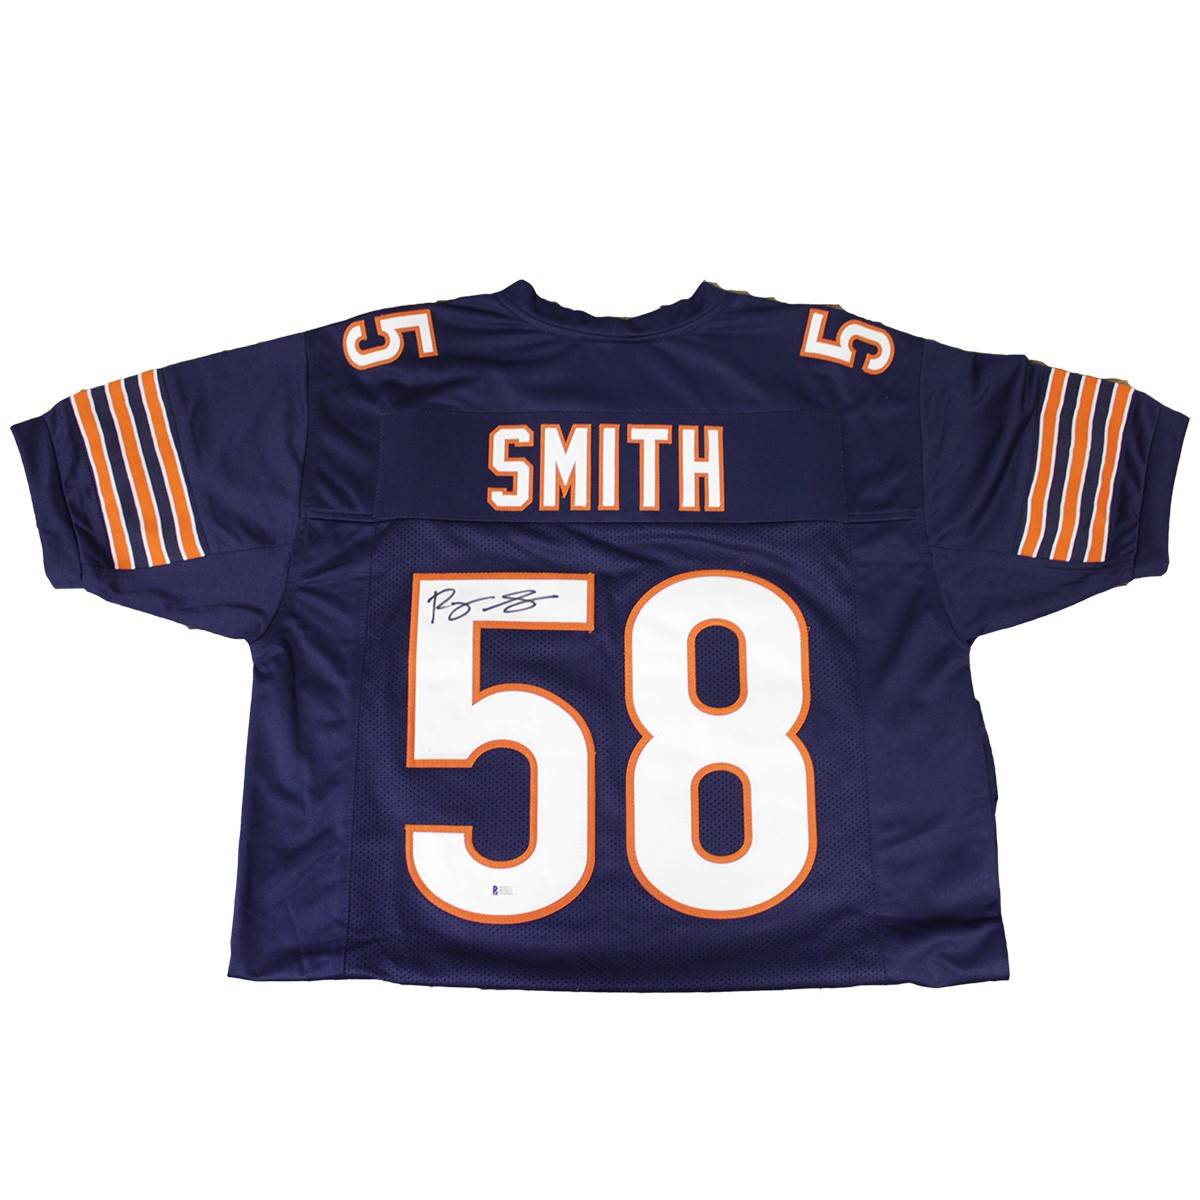 smith bears jersey